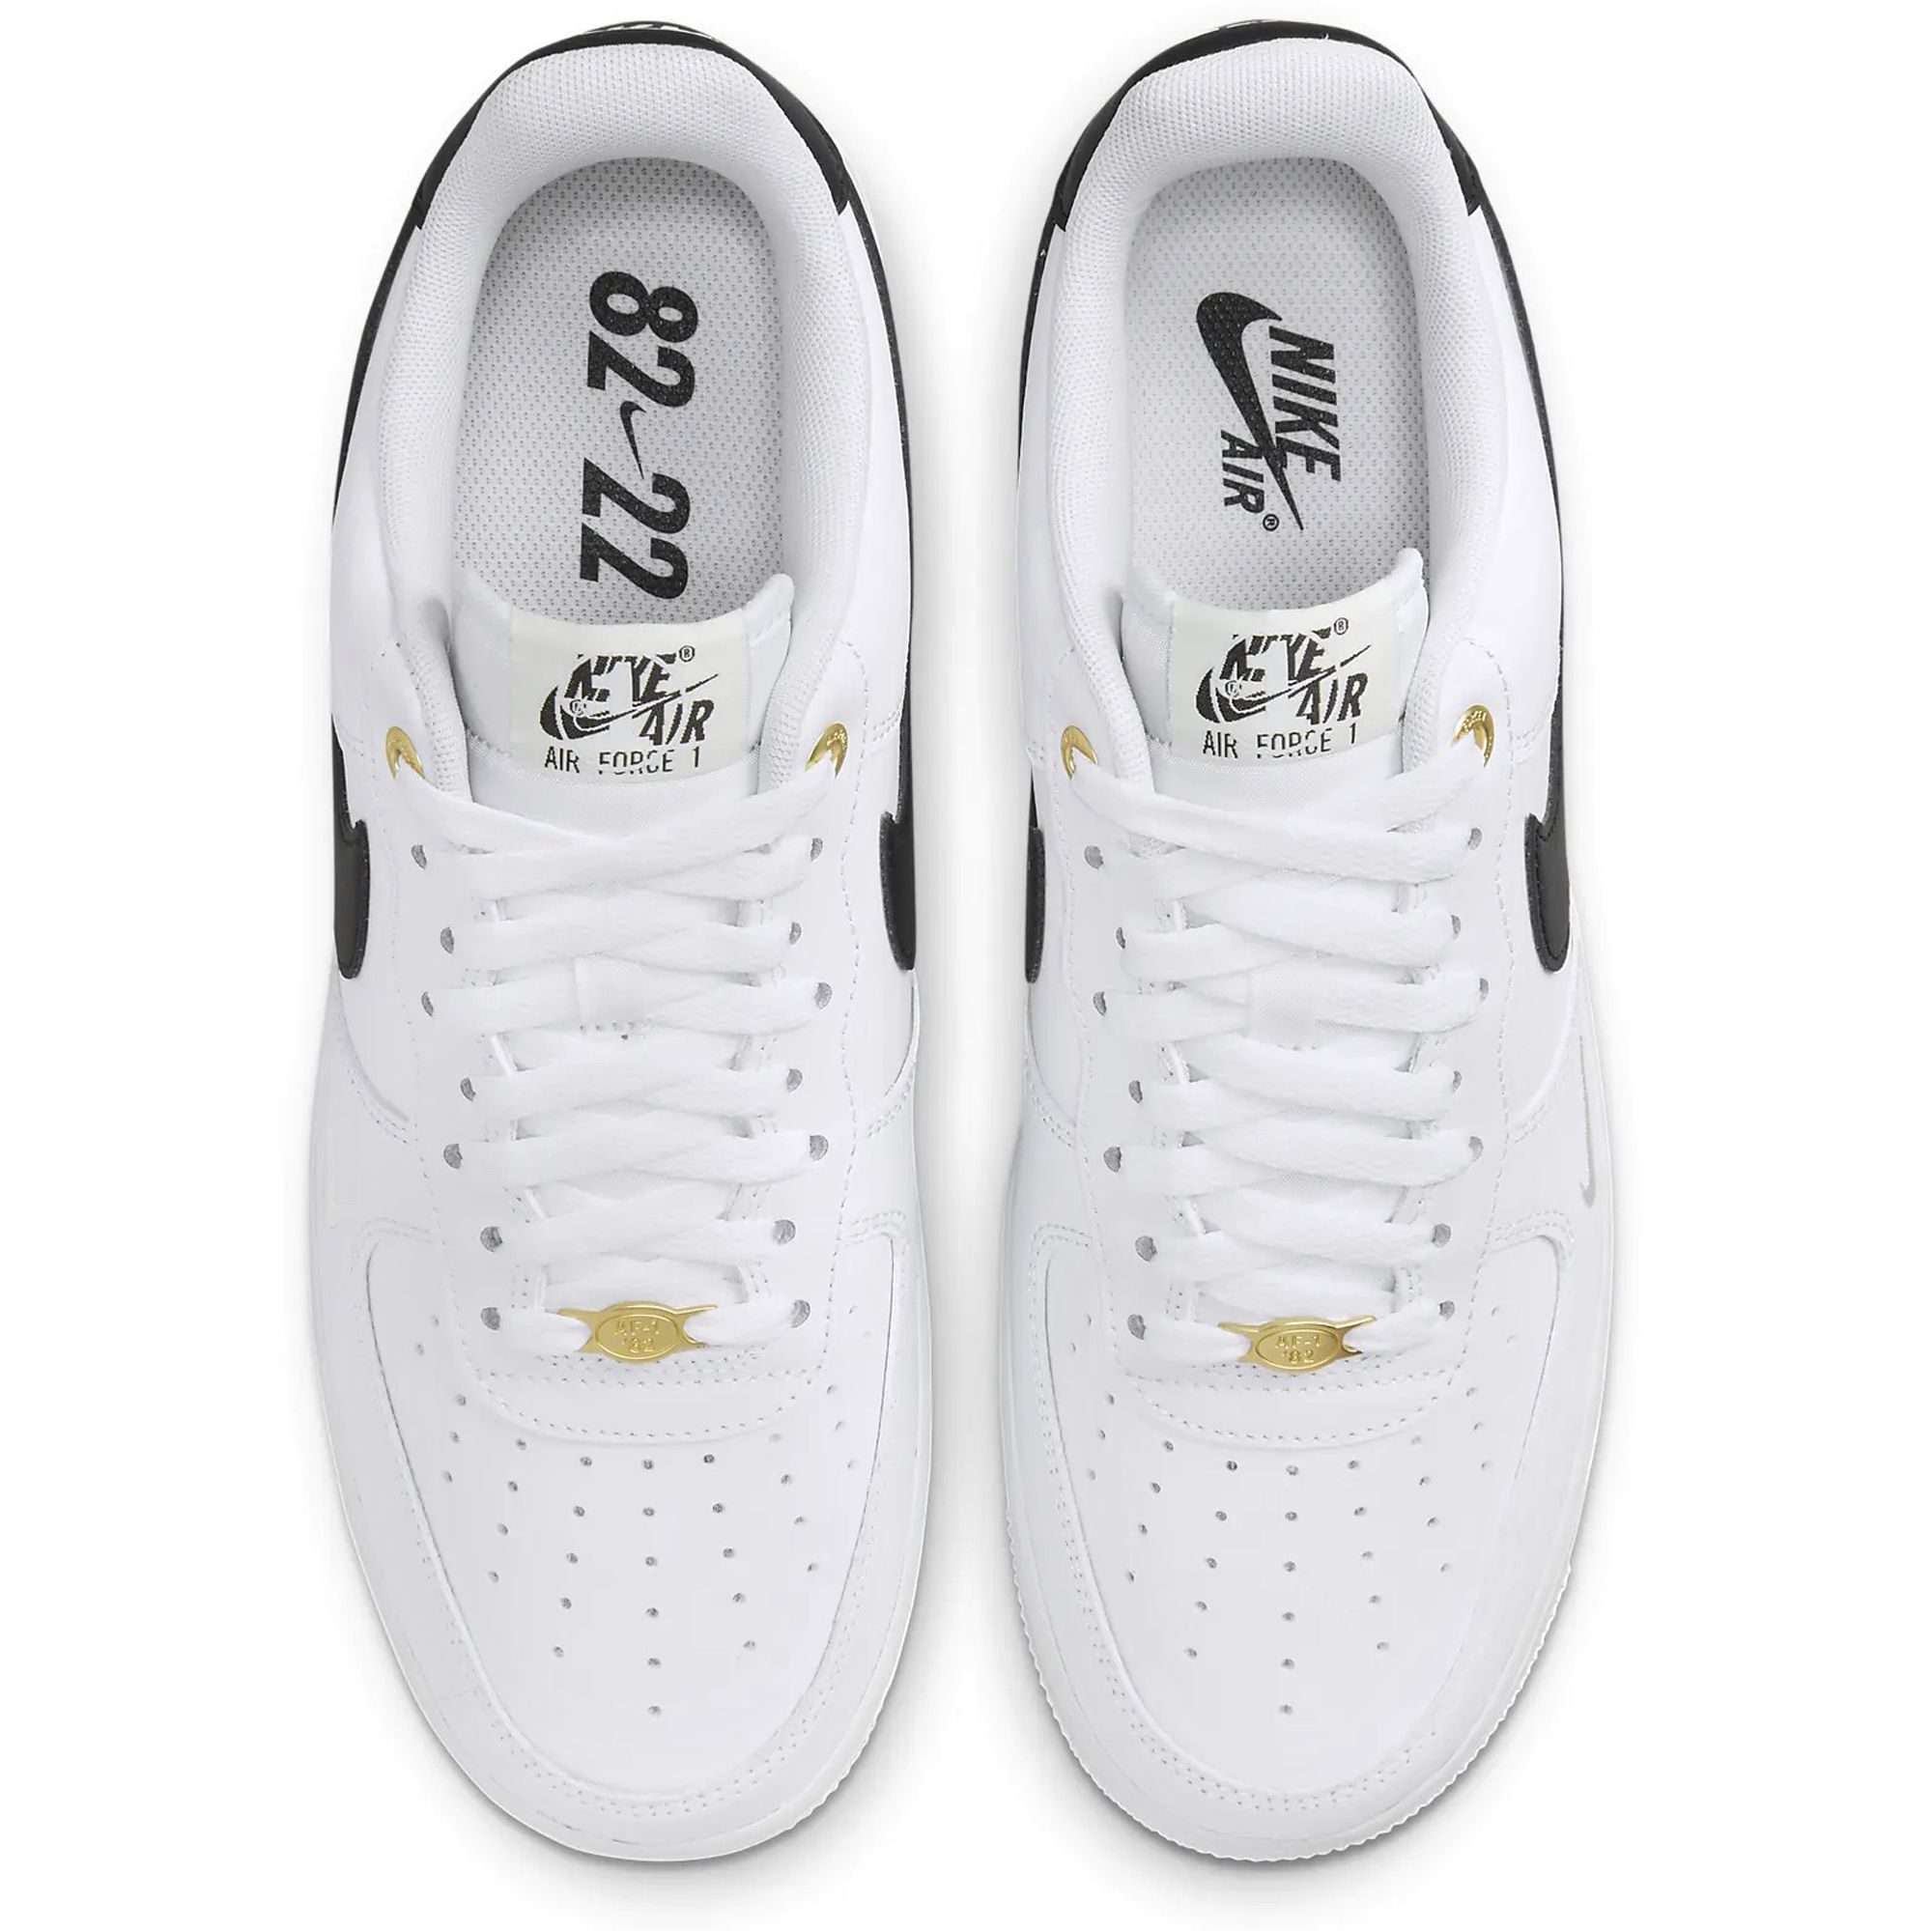 Nike Air Force 1 '07 LV8 White/Black-Metallic Gold-White